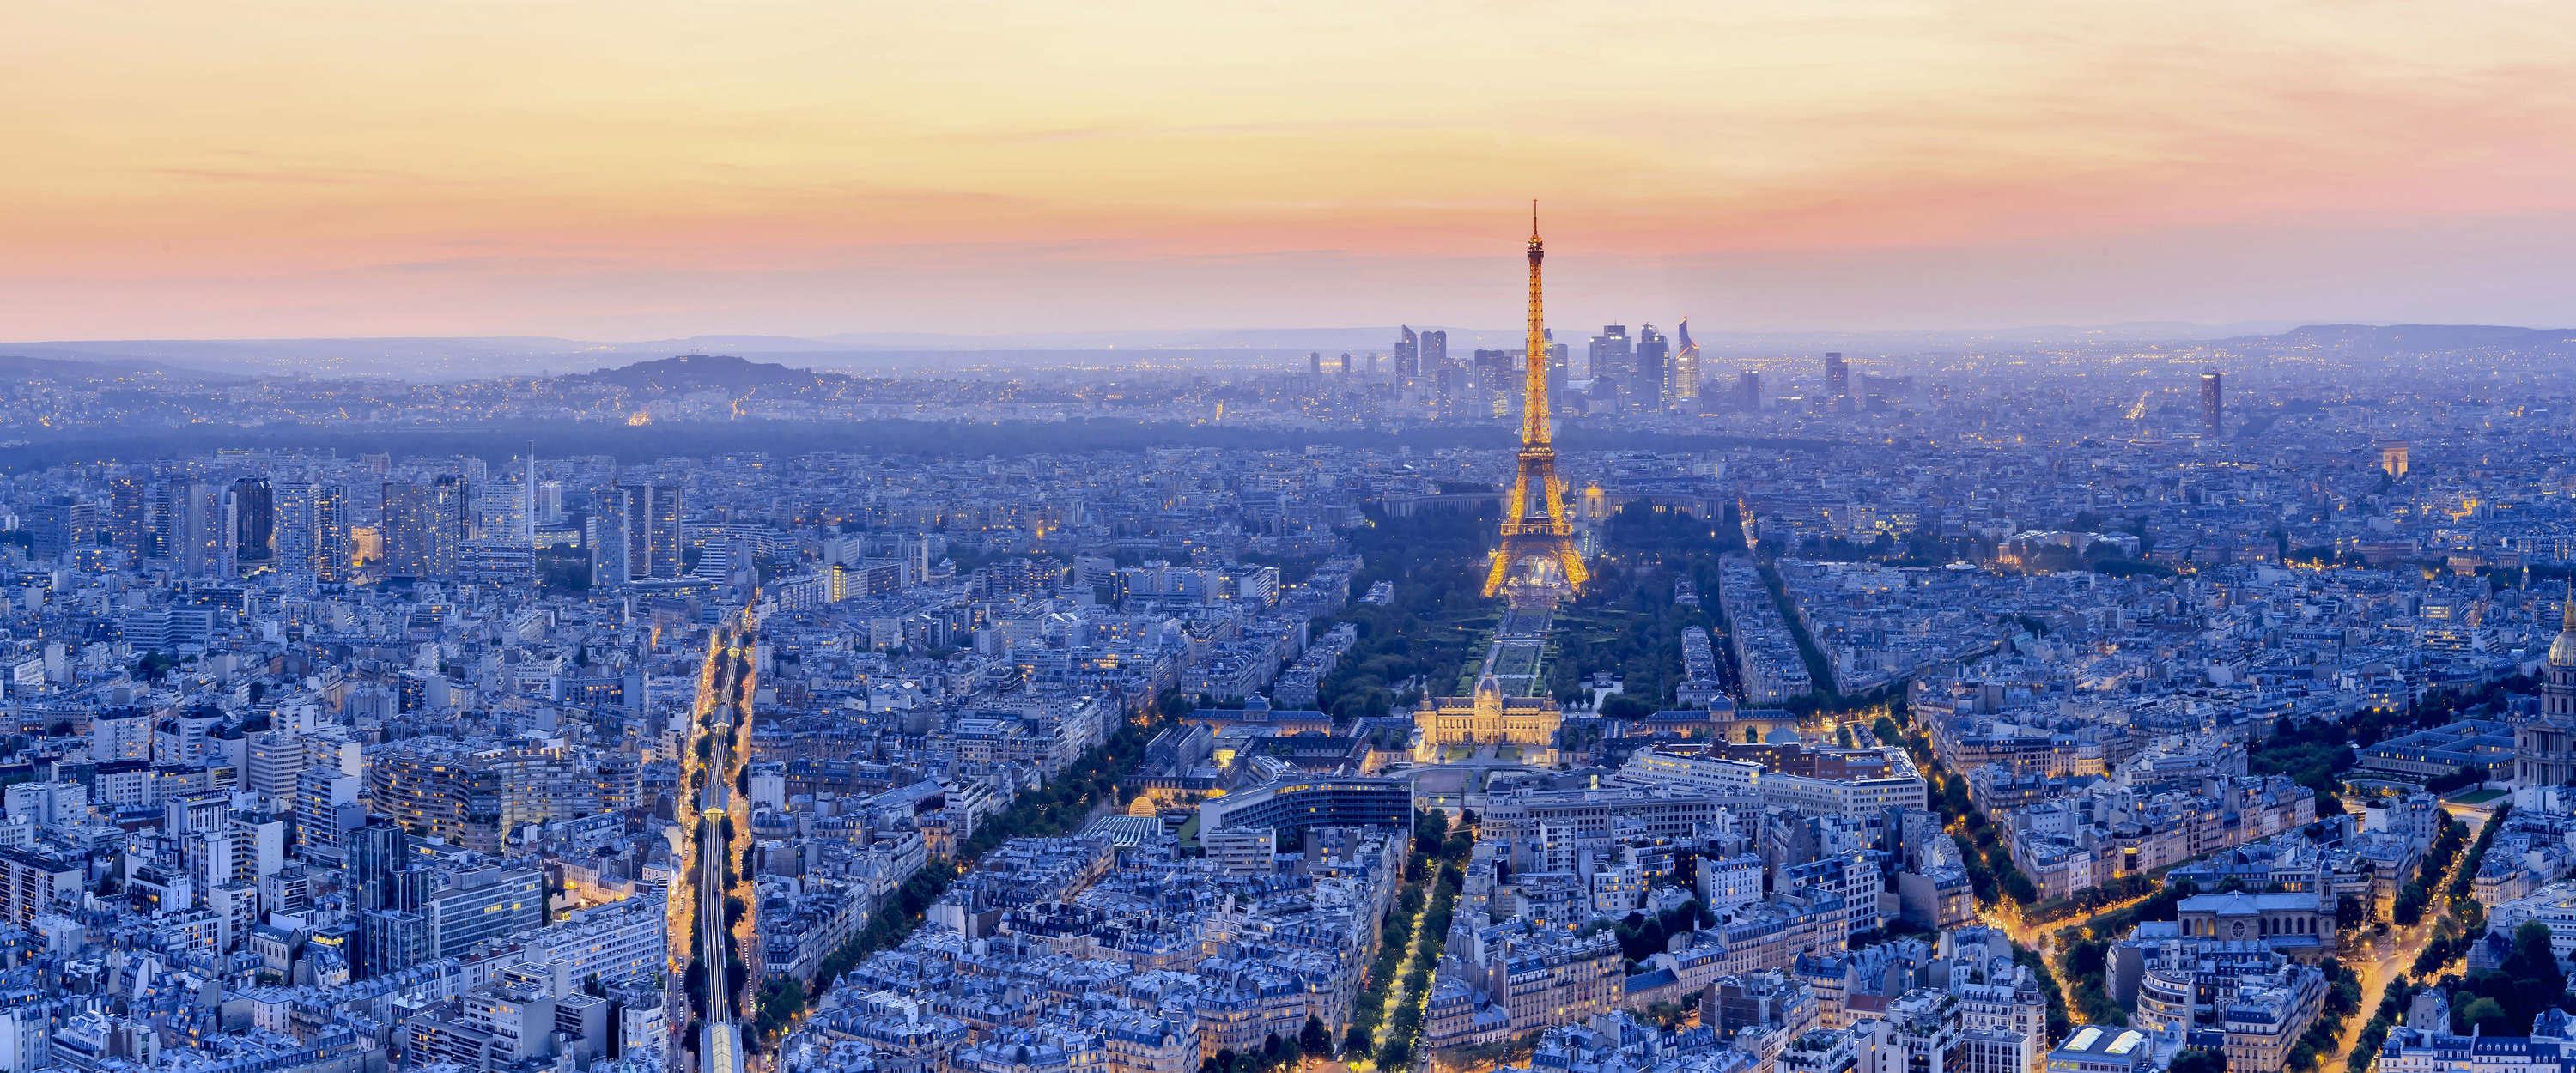             Photo wallpaper Paris glows metropolis at dawn
        